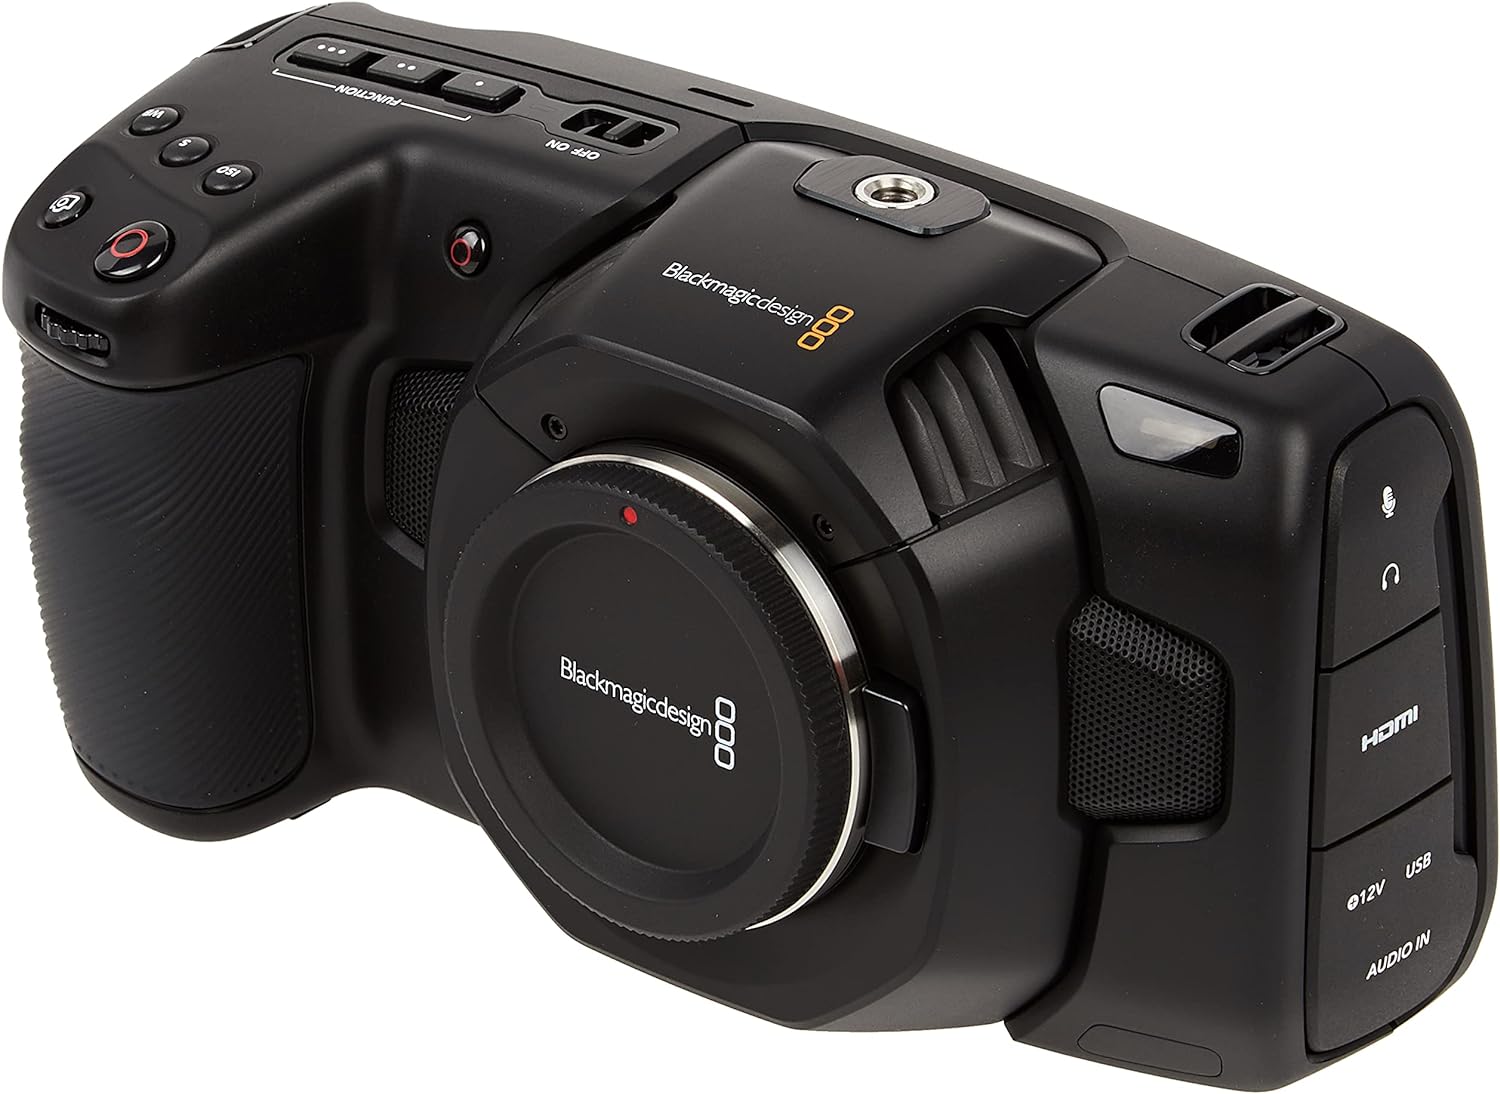 Blackmagic Design Pocket Cinema Camera 4K<br />
Brand: Blackmagic Design